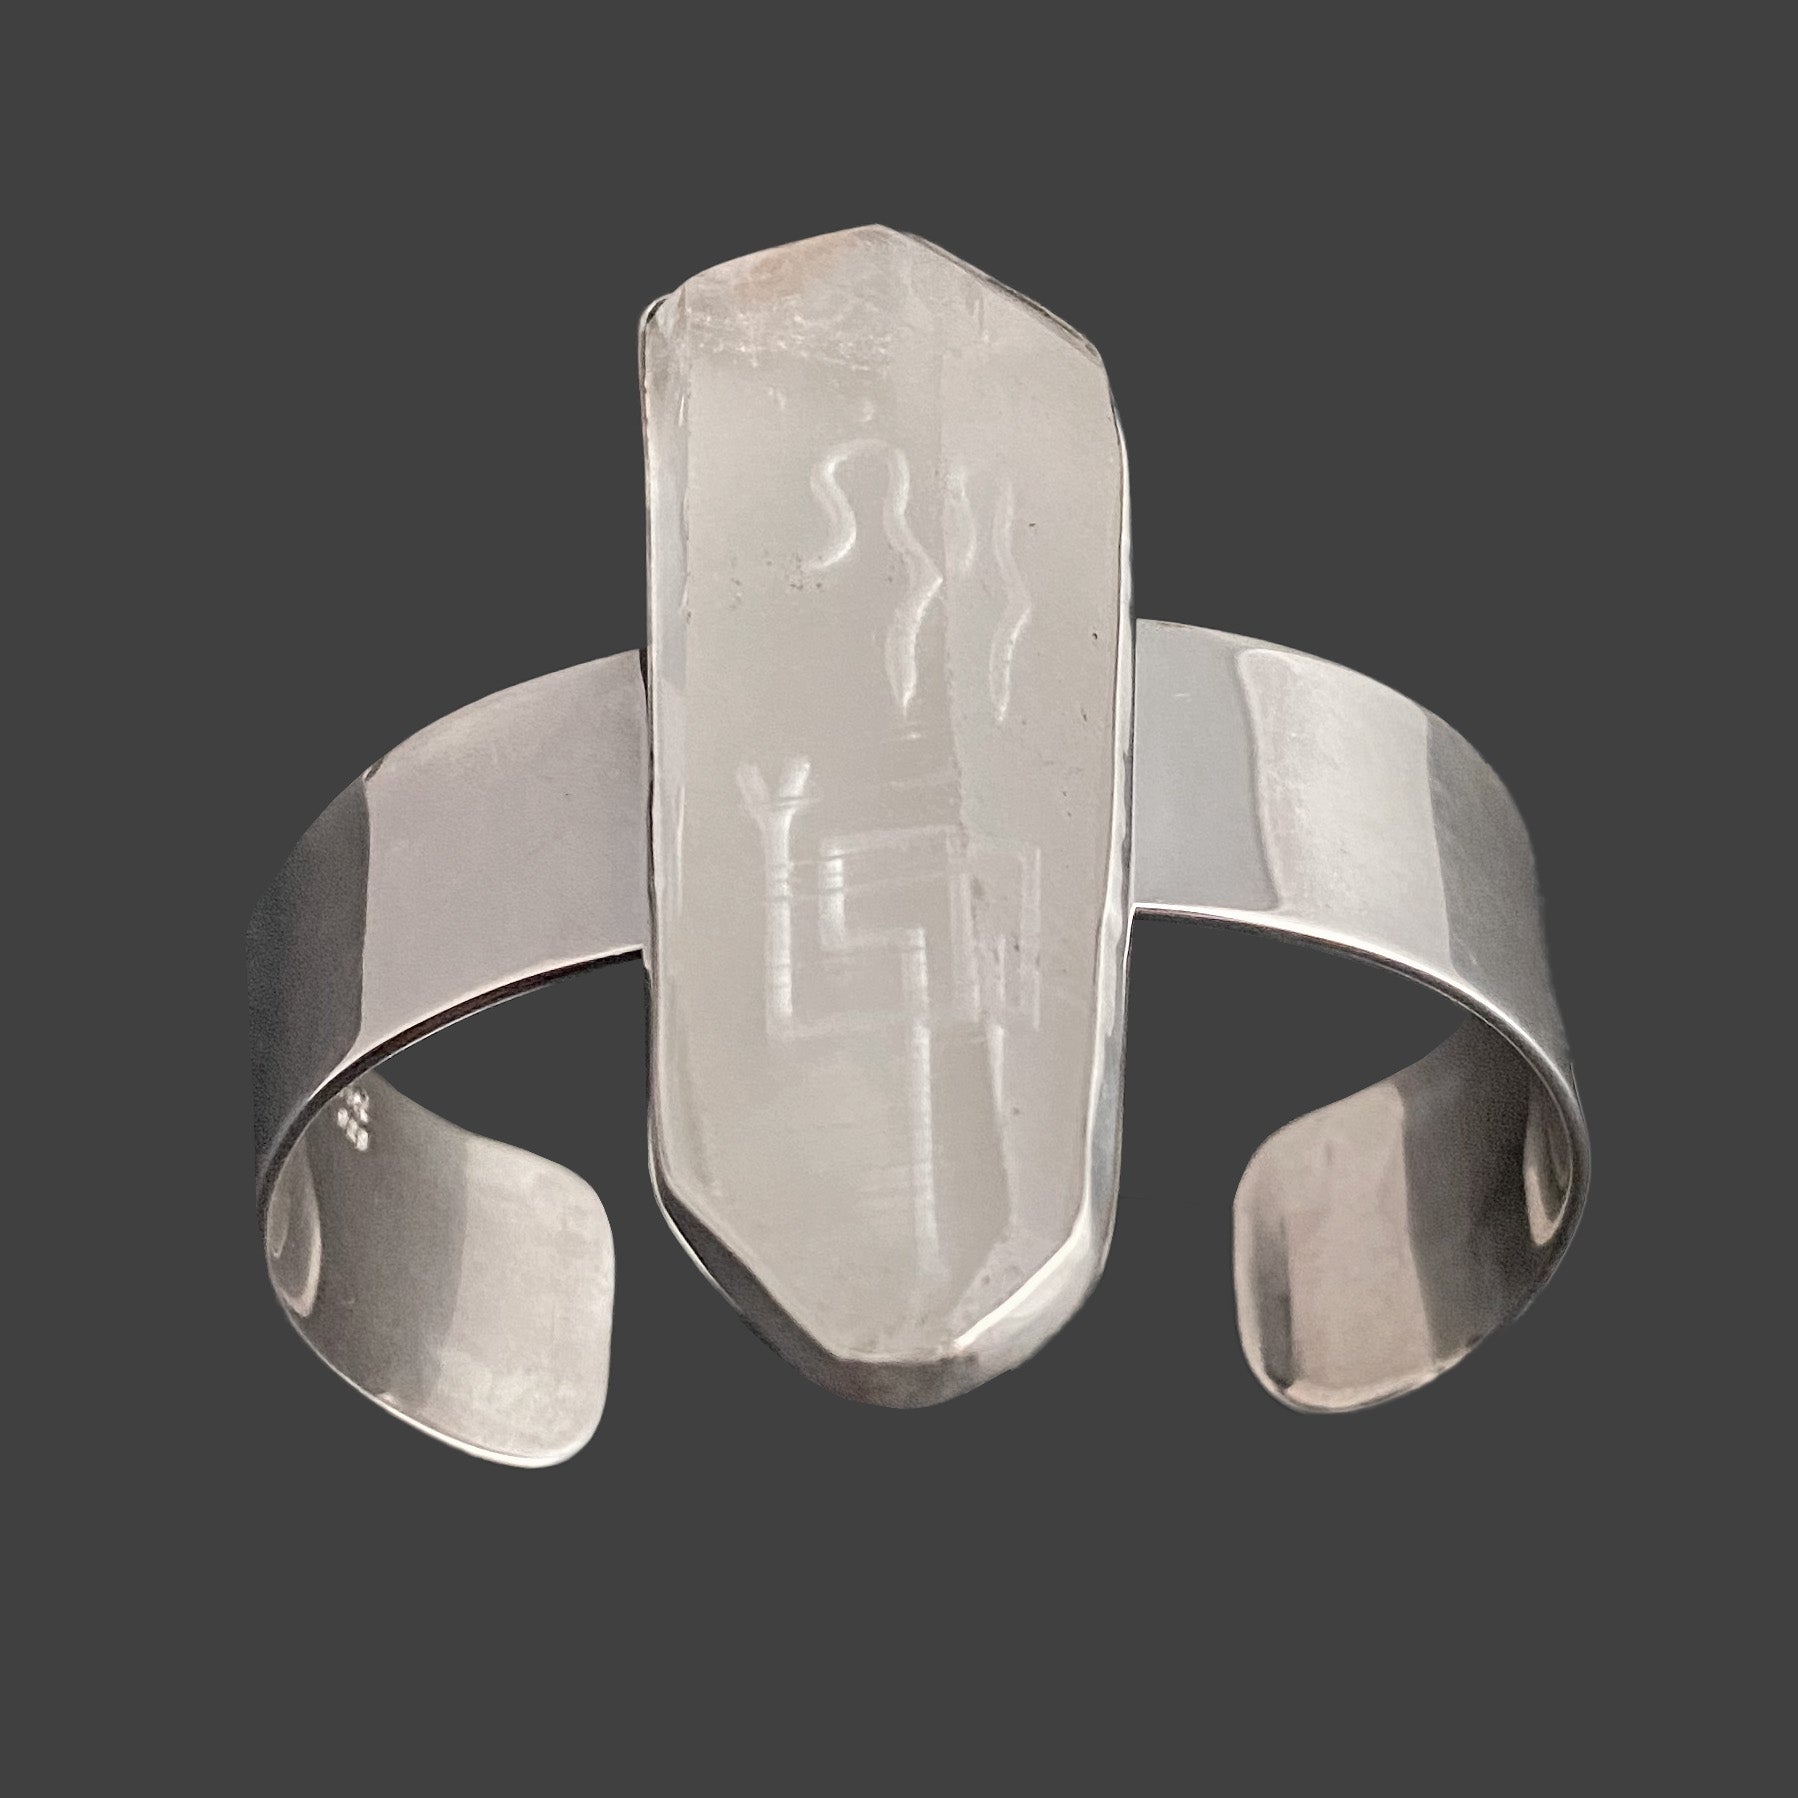 Natural Lemurian Quartz Sterling Silver Cuff Bracelet withDivine Feminine and Sacred Masculine Symbols